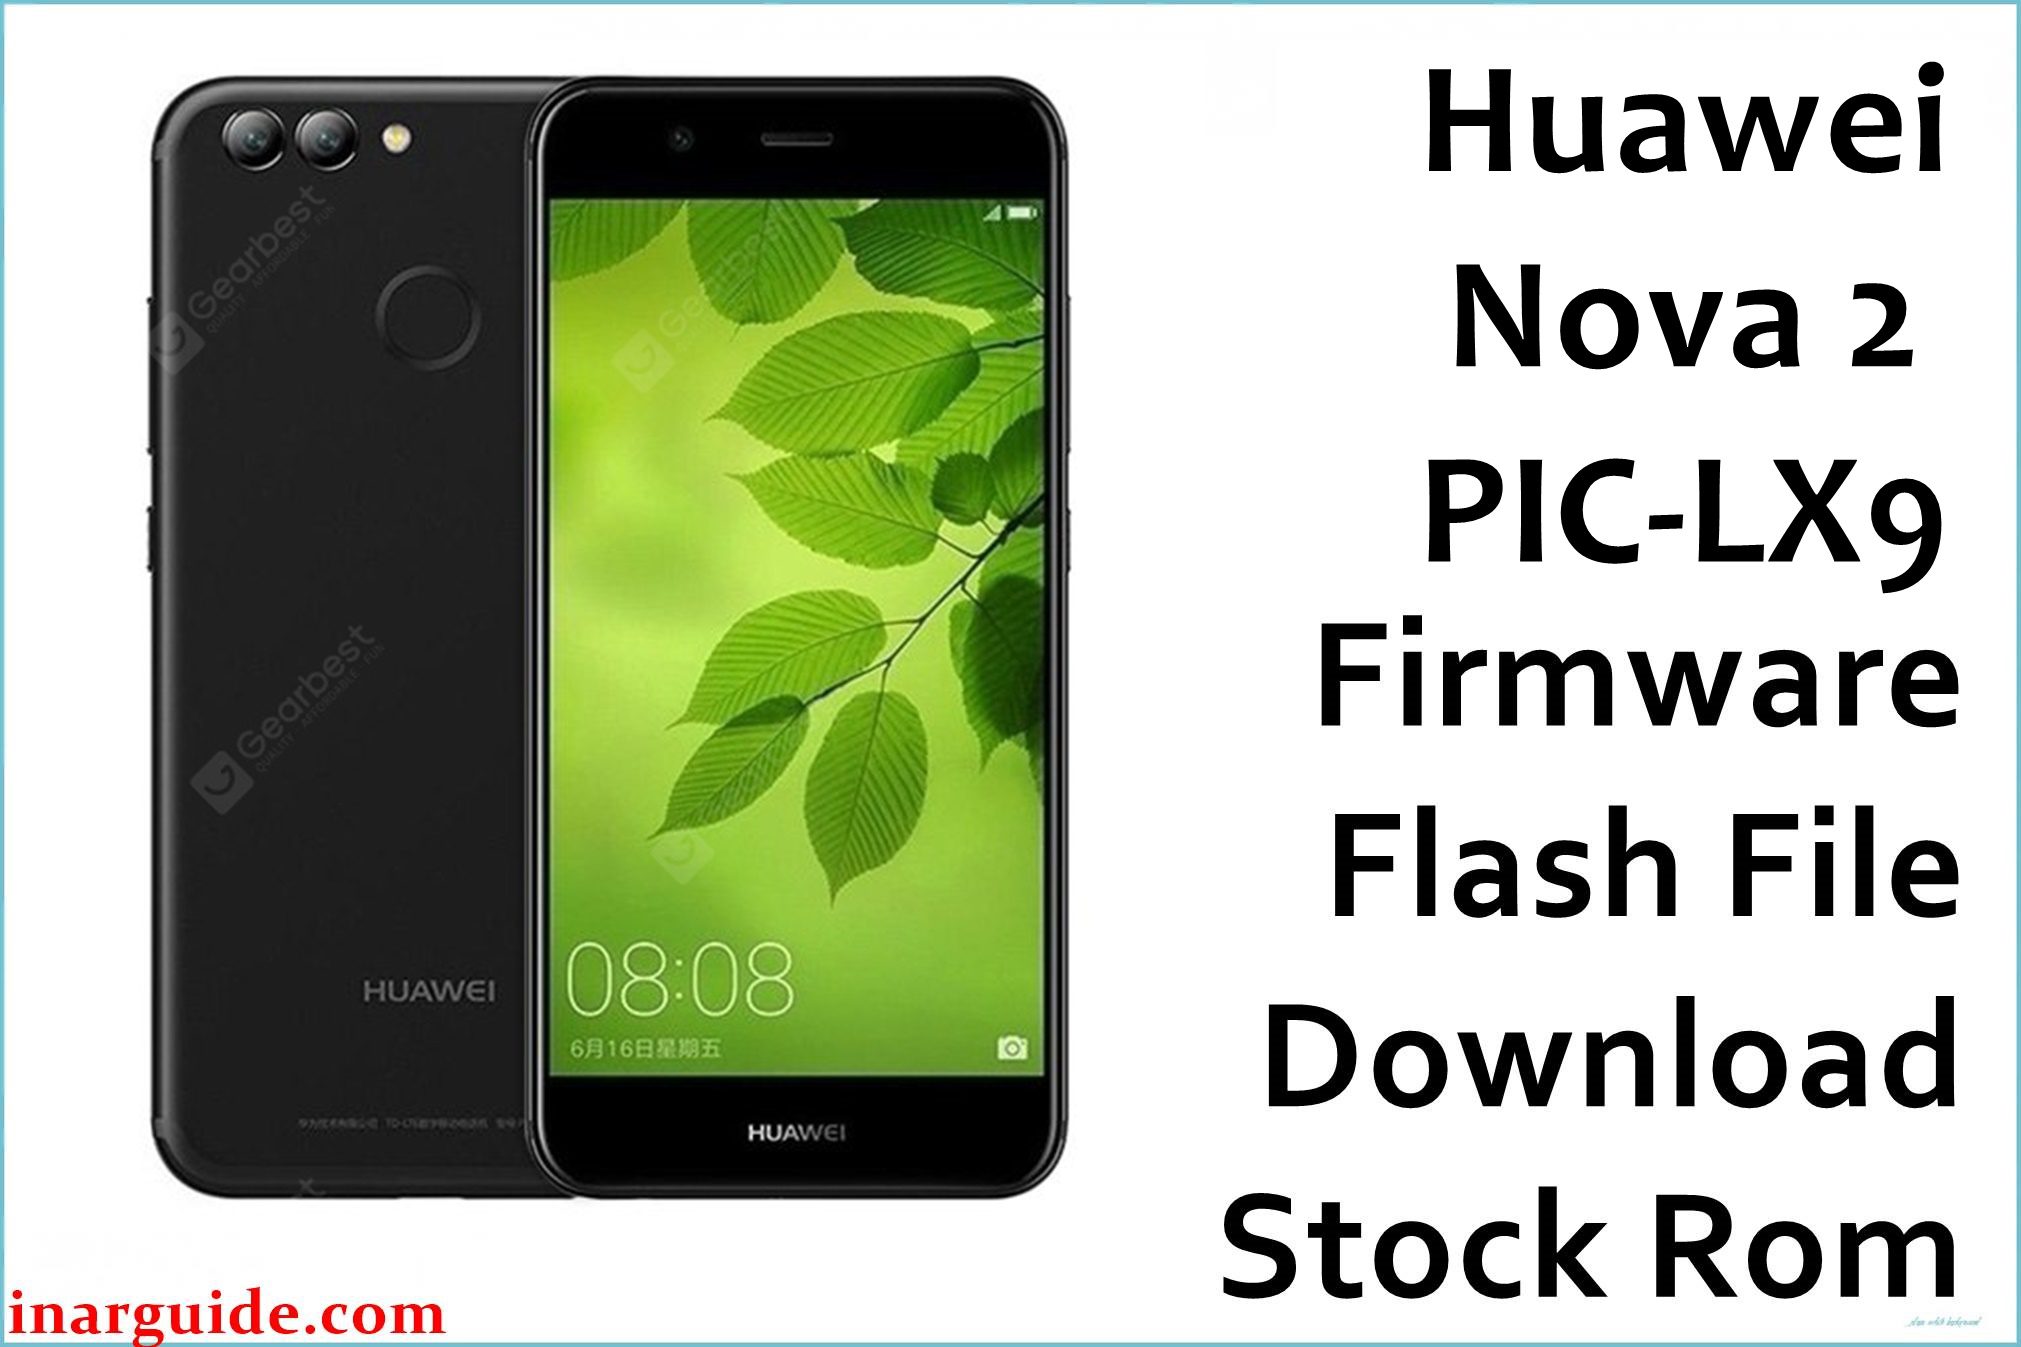 Huawei Nova 2 PIC LX9